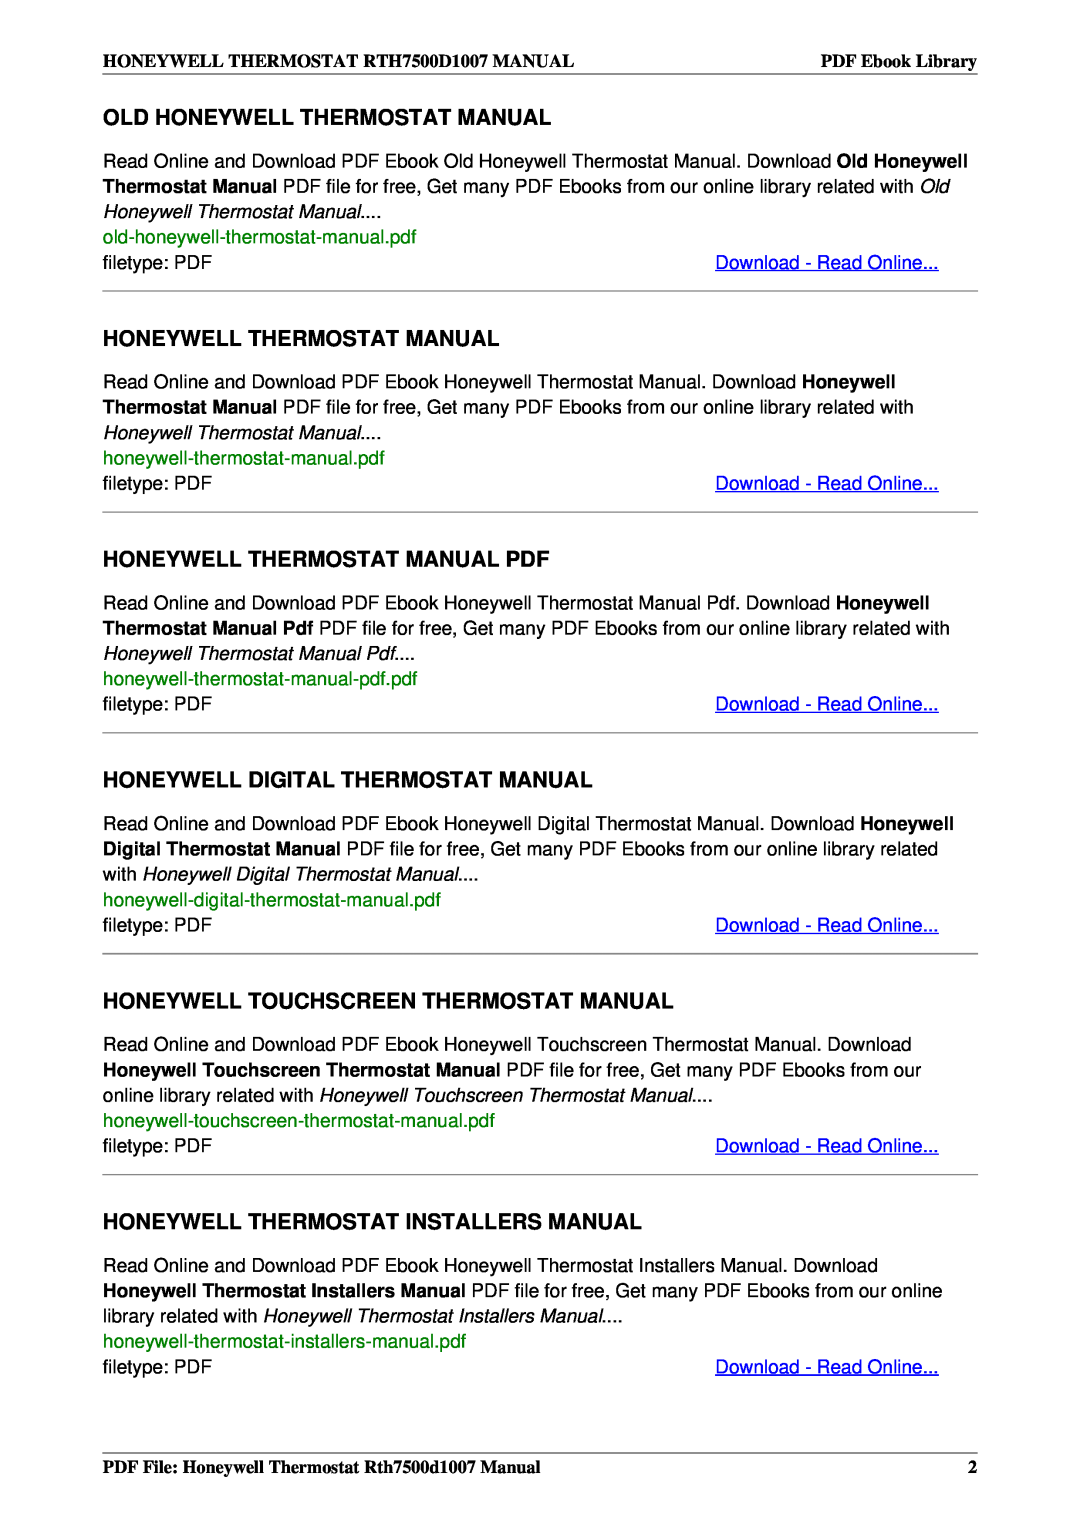 Honeywell RTH7500D1007 Old Honeywell Thermostat Manual, Honeywell Thermostat Manual Pdf, honeywell-thermostat-manual.pdf 